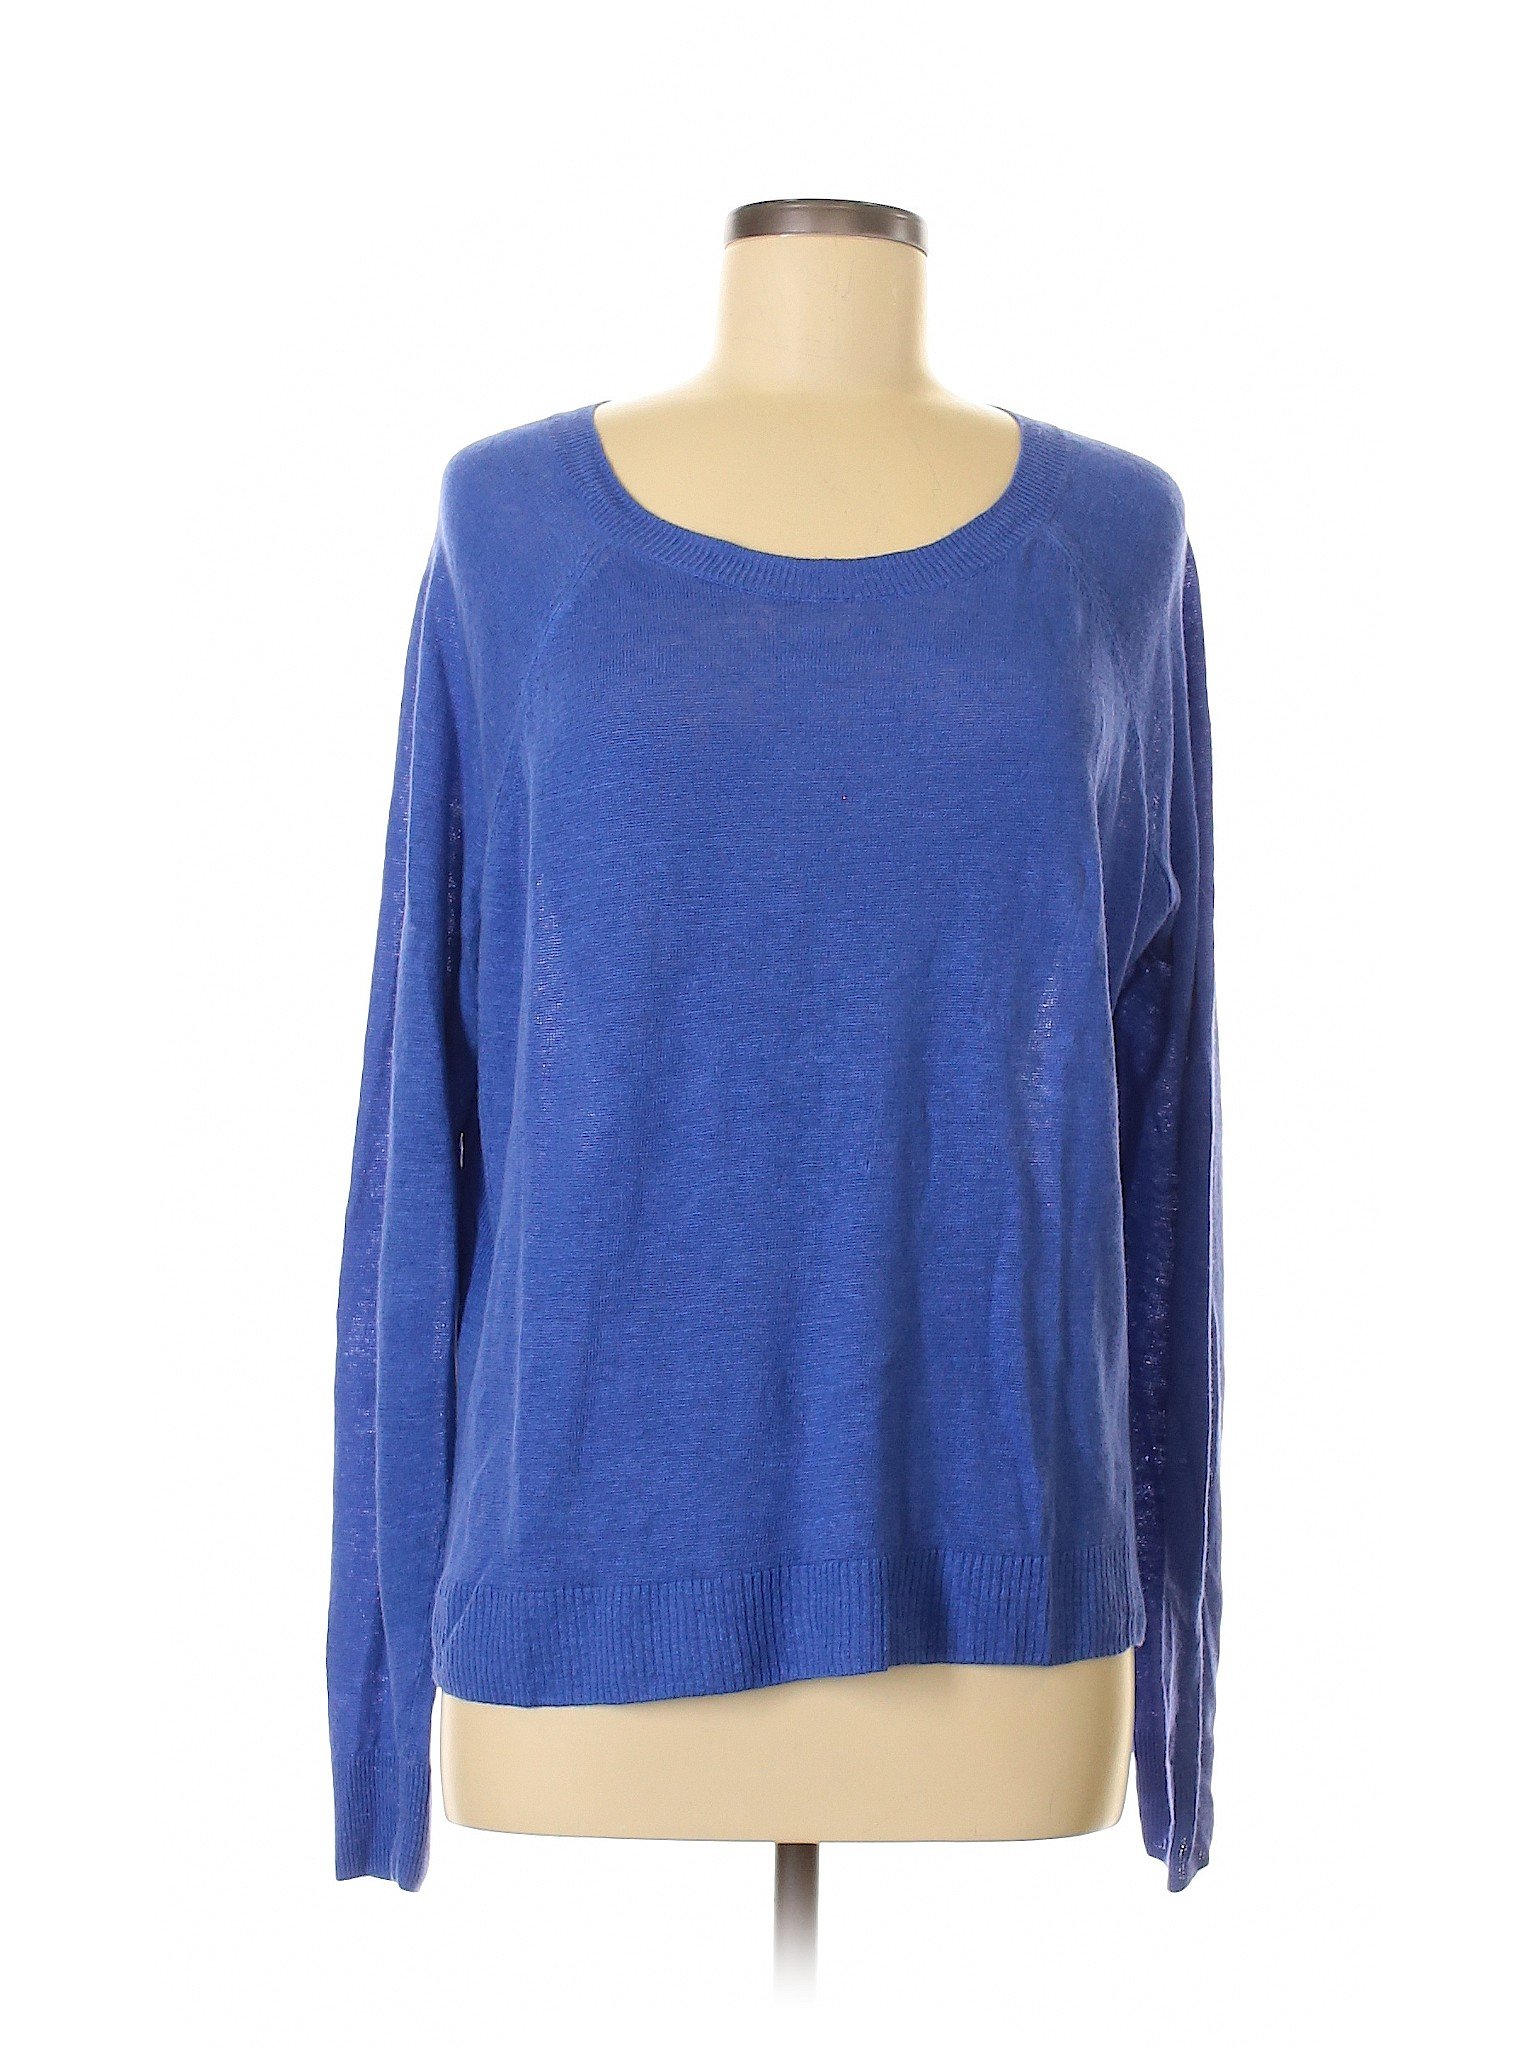 J.Crew Women Blue Pullover Sweater L | eBay